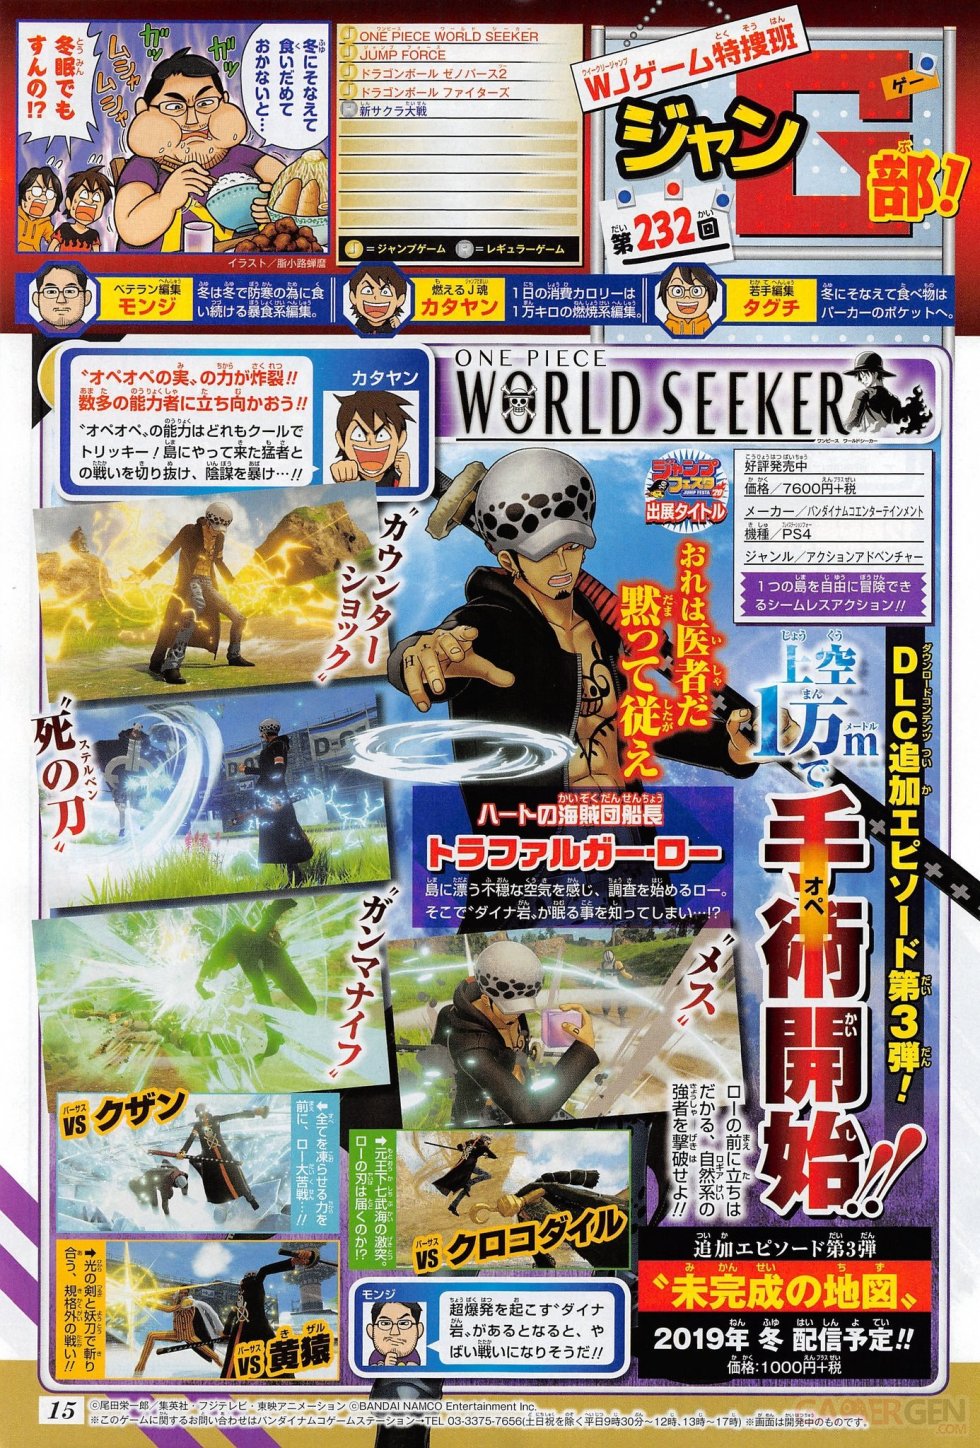 One-Piece-World-Seeker-scan-08-11-2019